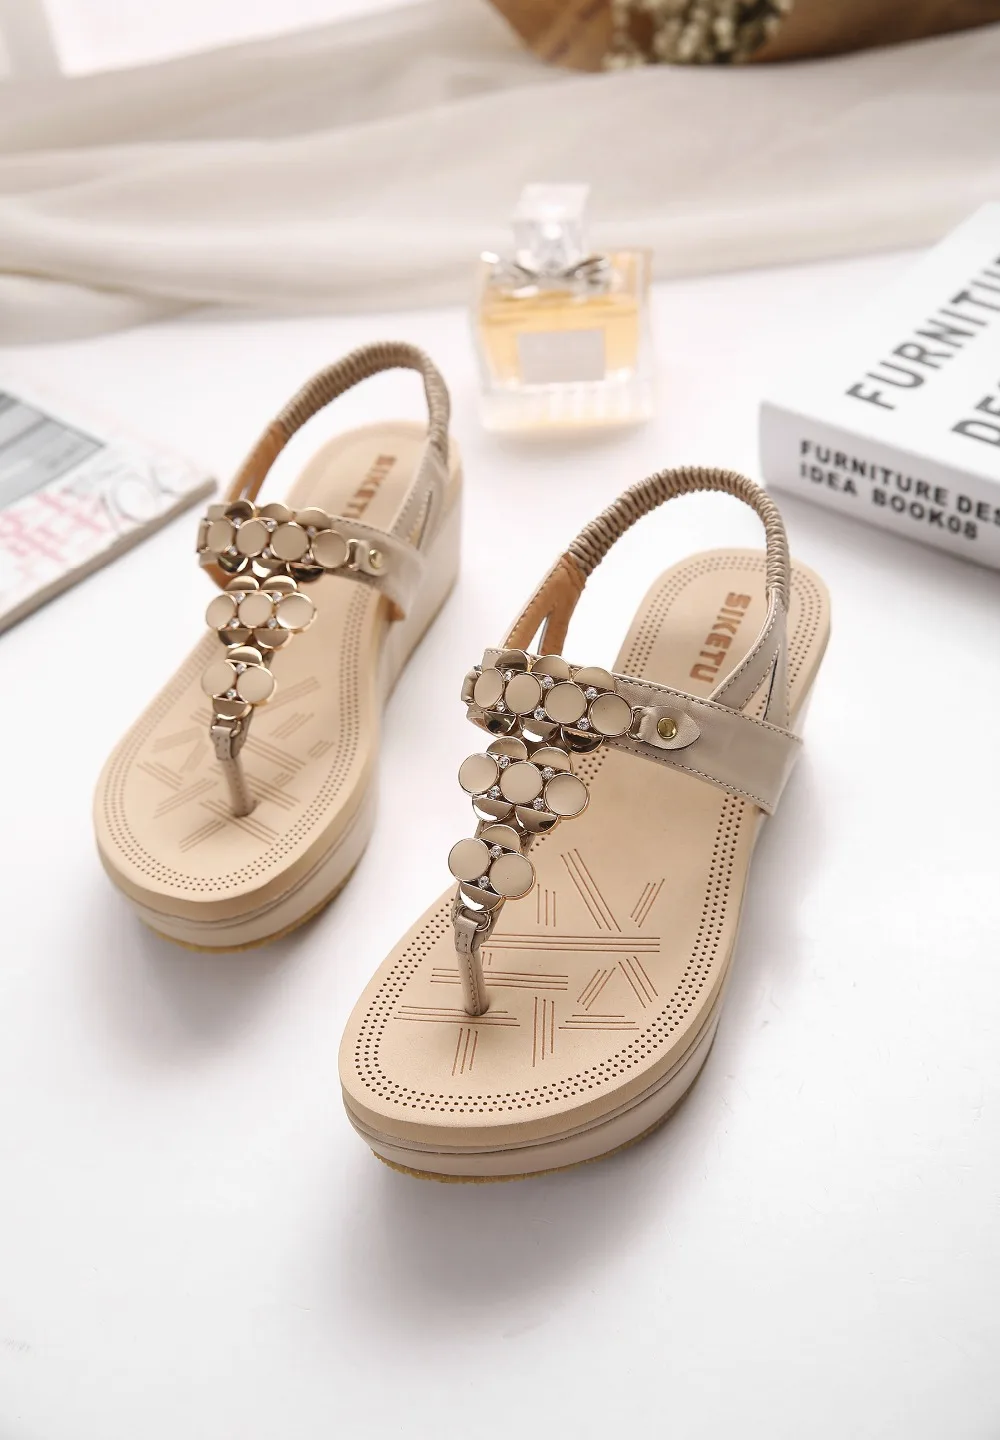 Summer Comfortable Sandals Women Platform Sandals Fashion Flip Flops Shoes Woman Sandals 35-40 SIKETU Brand